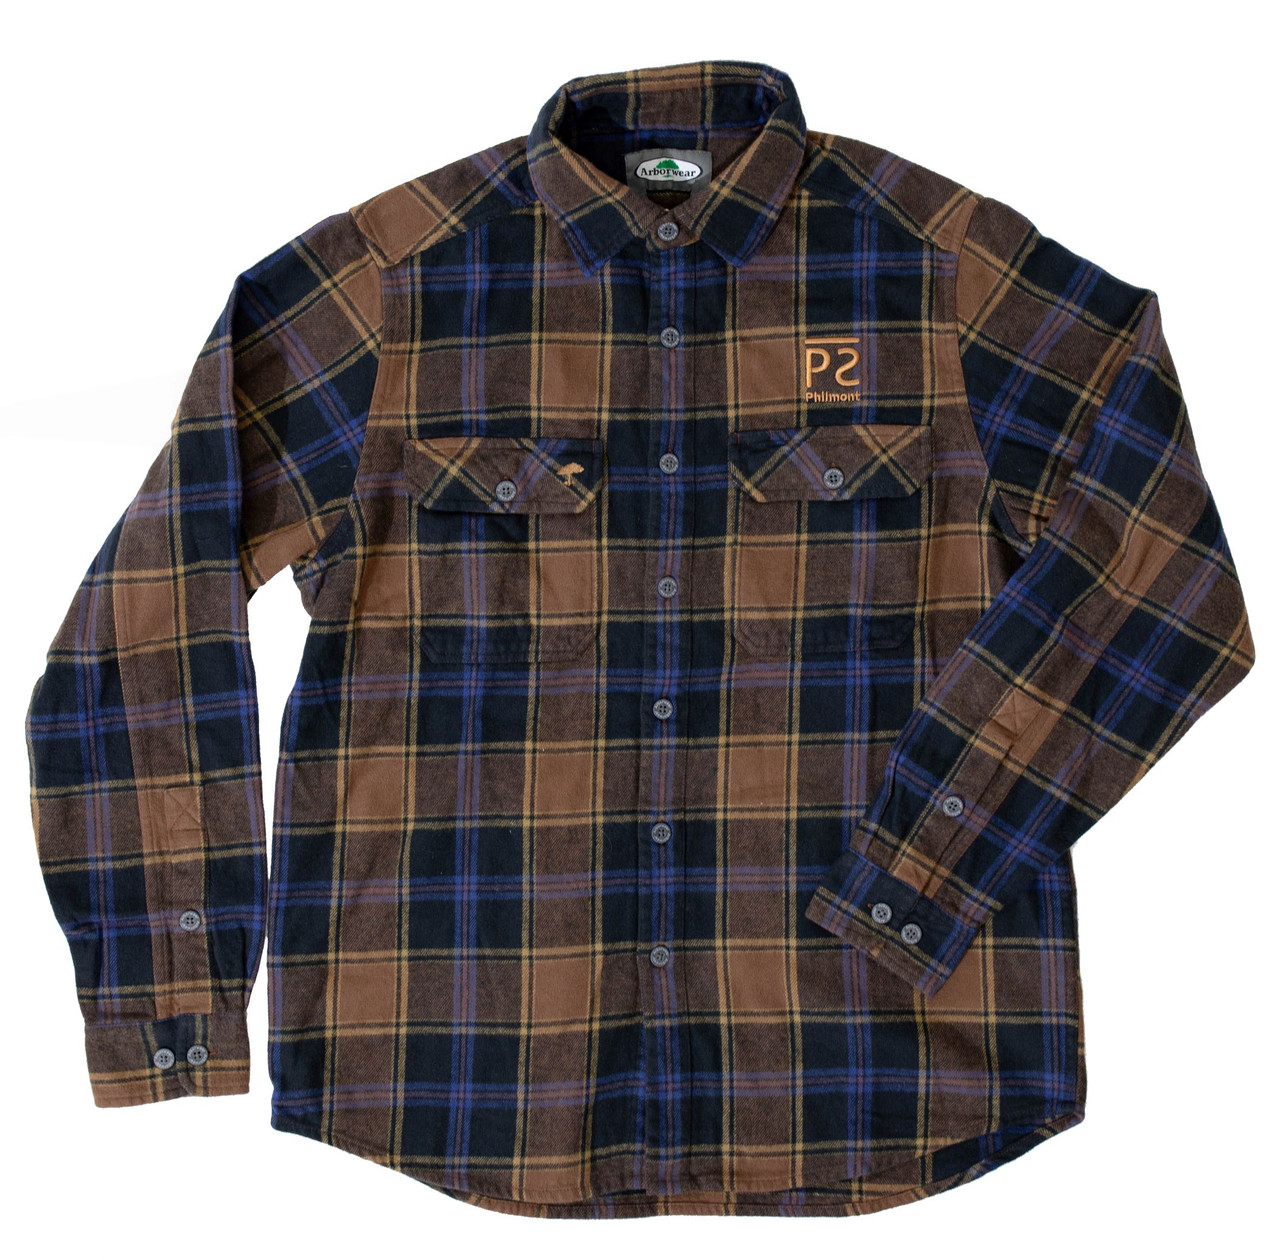  Arborwear Men's 205162 Timber Chamois Shirt, Black - M:  Clothing, Shoes & Jewelry